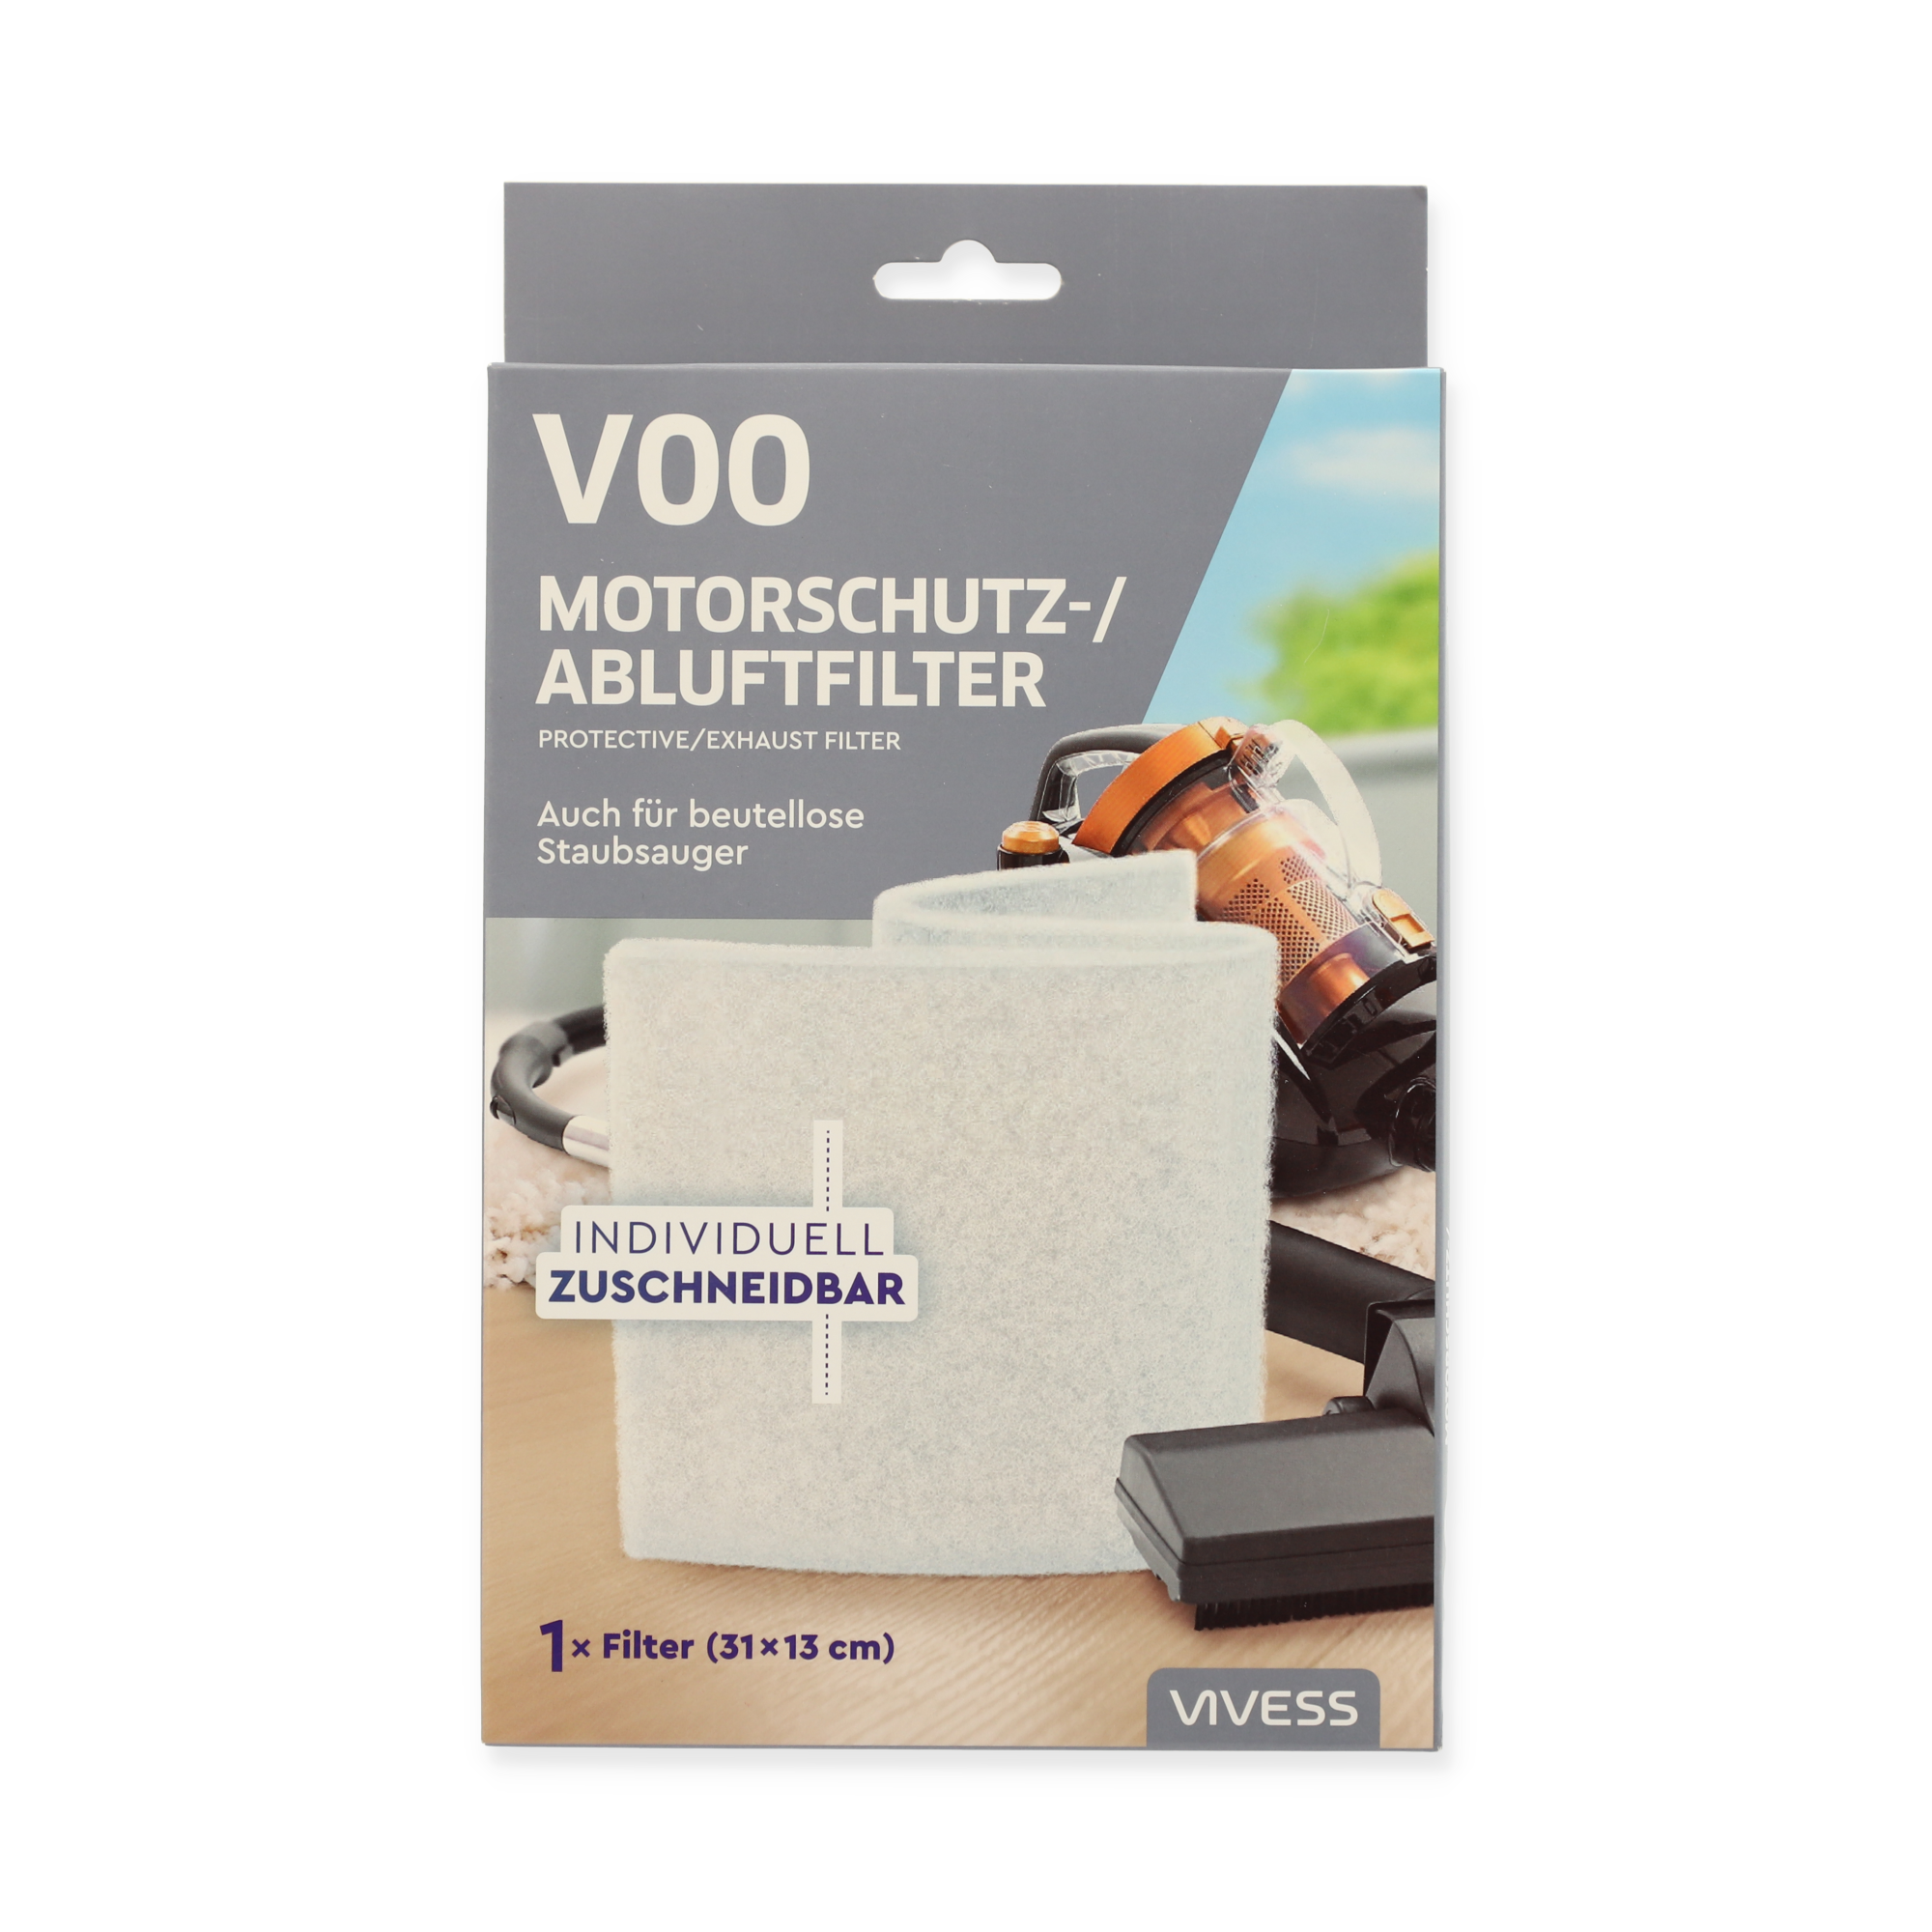 Motorschutz-/Abluftfilter 'V00' 1 Stück + product picture